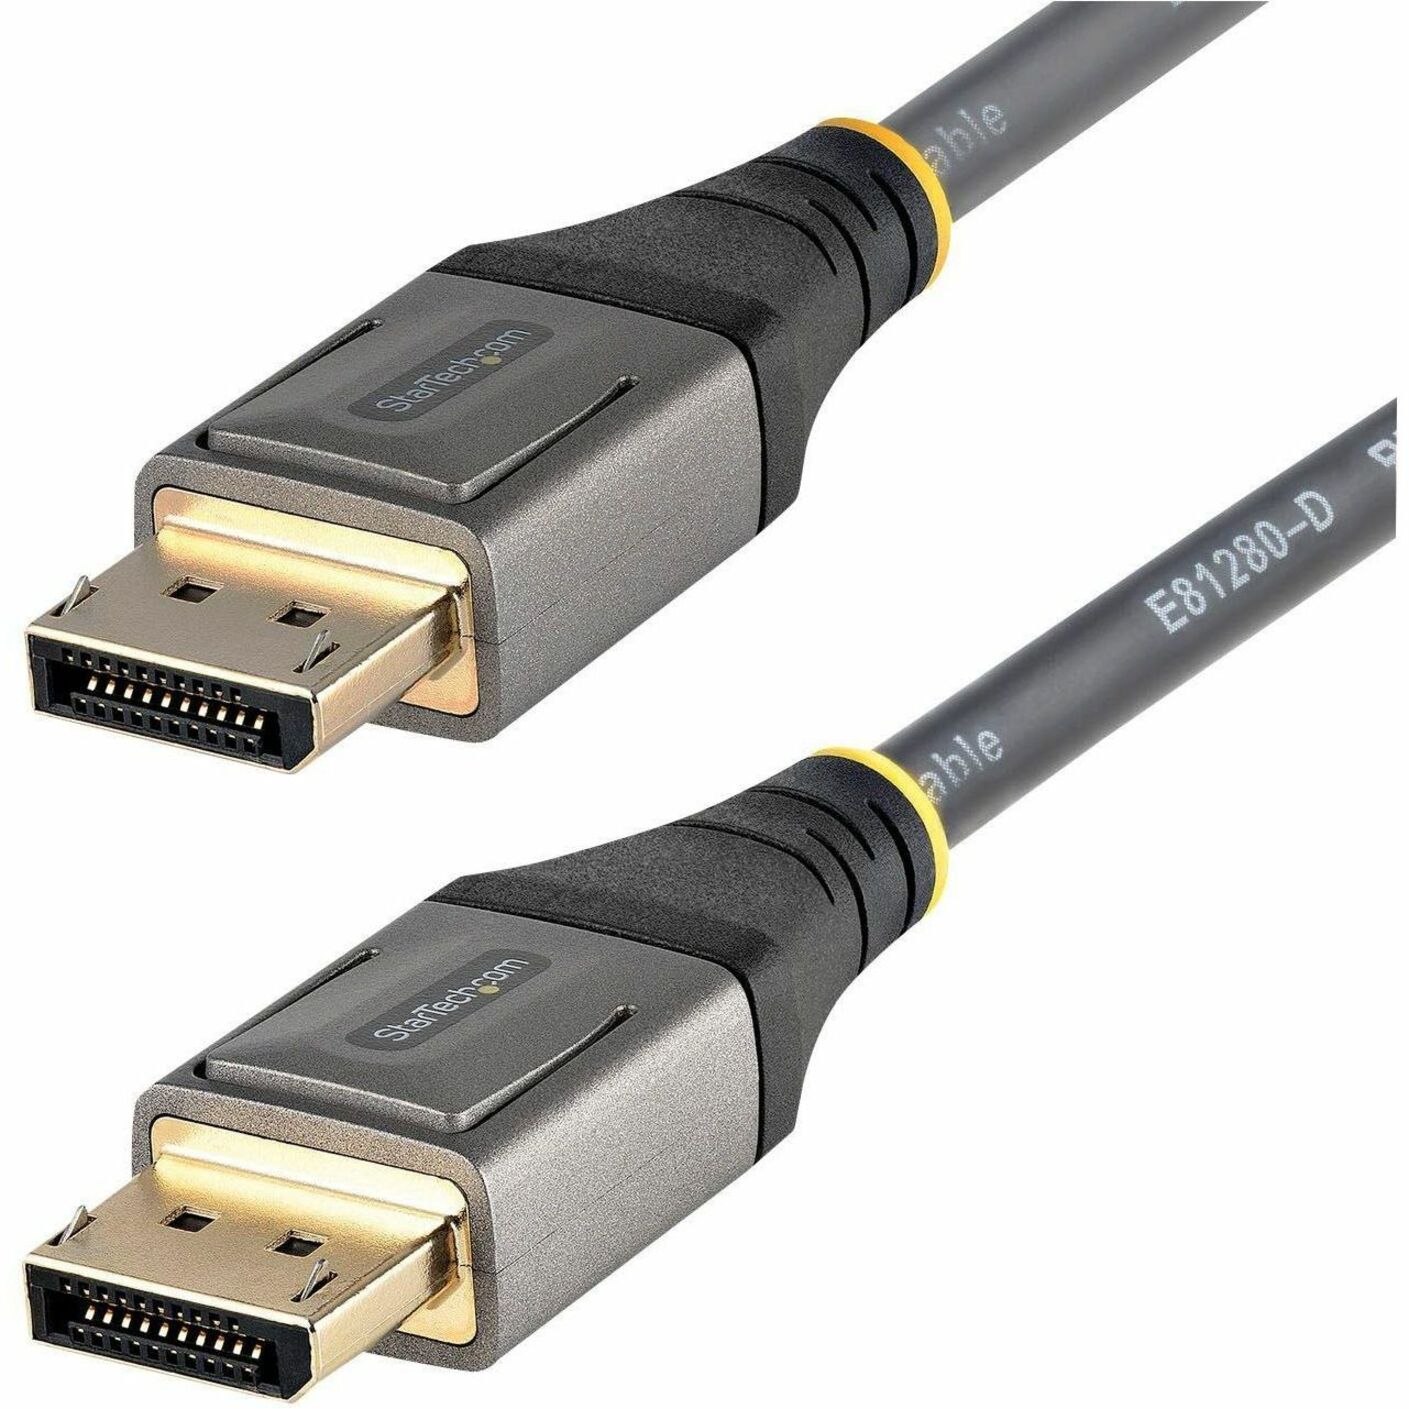 StarTech.com DP14VMM2M DisplayPort 1.4 8K Cable, 6ft (2m) VESA Certified, 8K 60Hz HDR10, UHD 4K 120Hz Video, DP to DP Monitor Cord